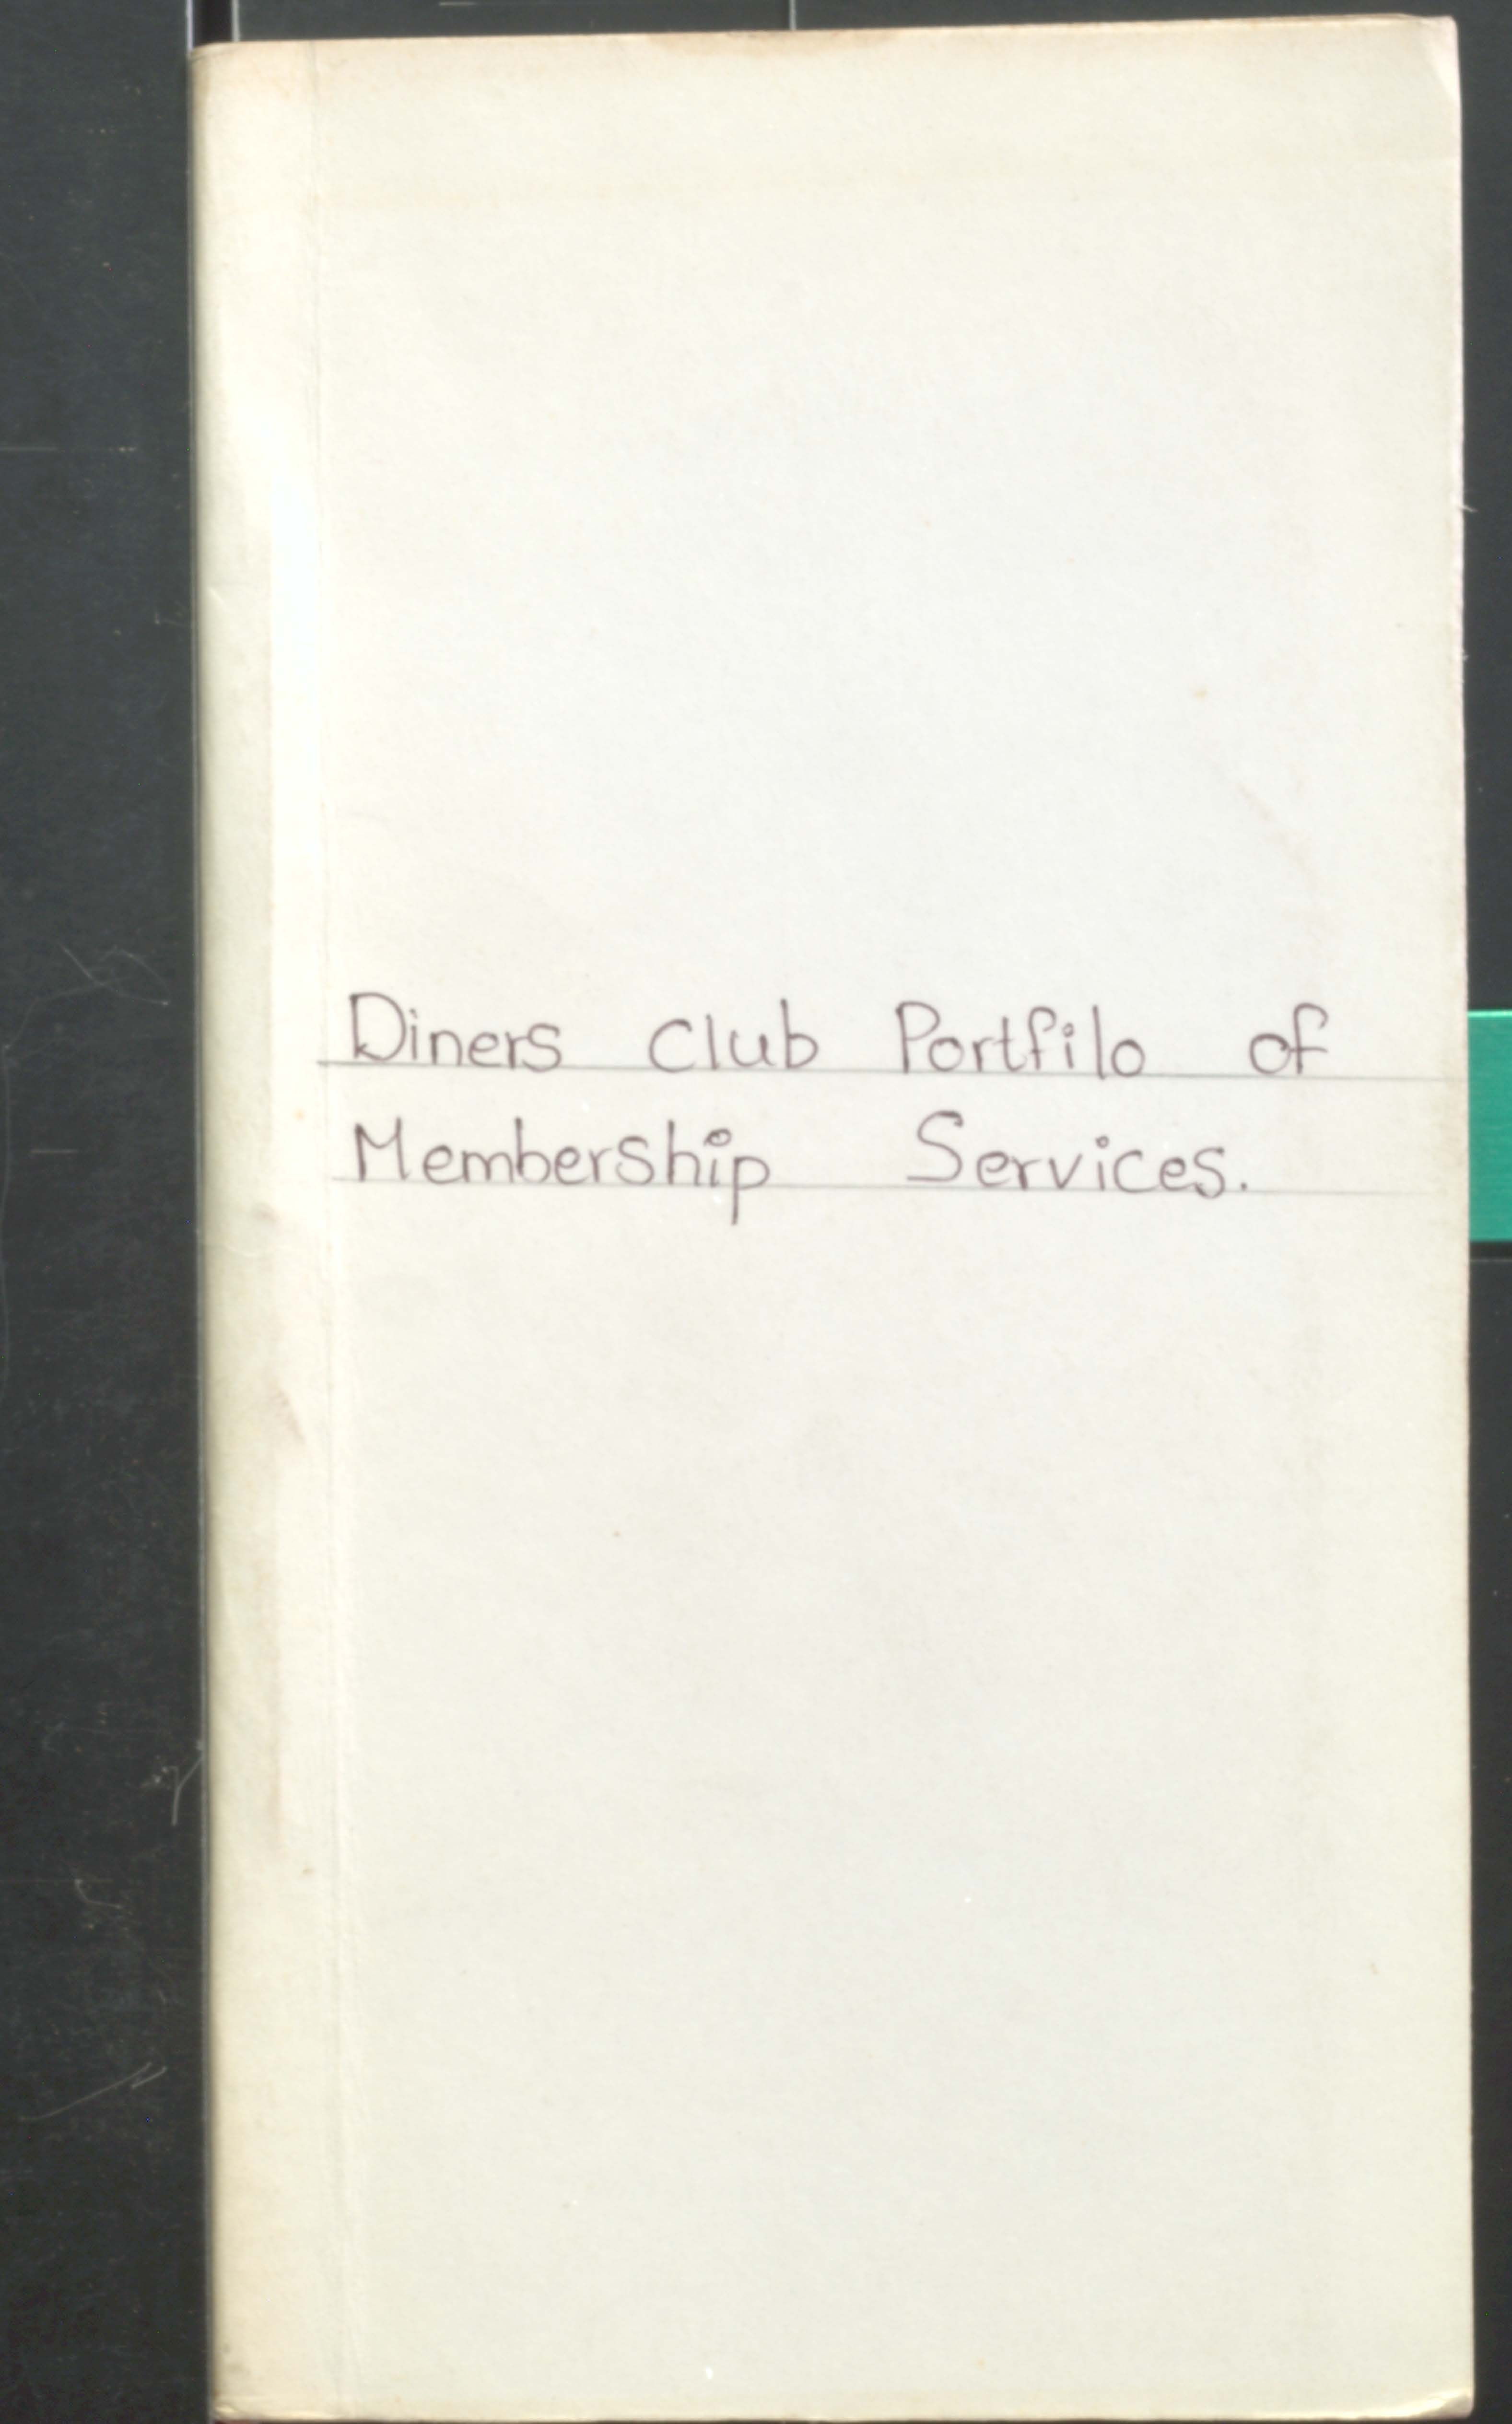 Dinners Club Portfilood membership Services